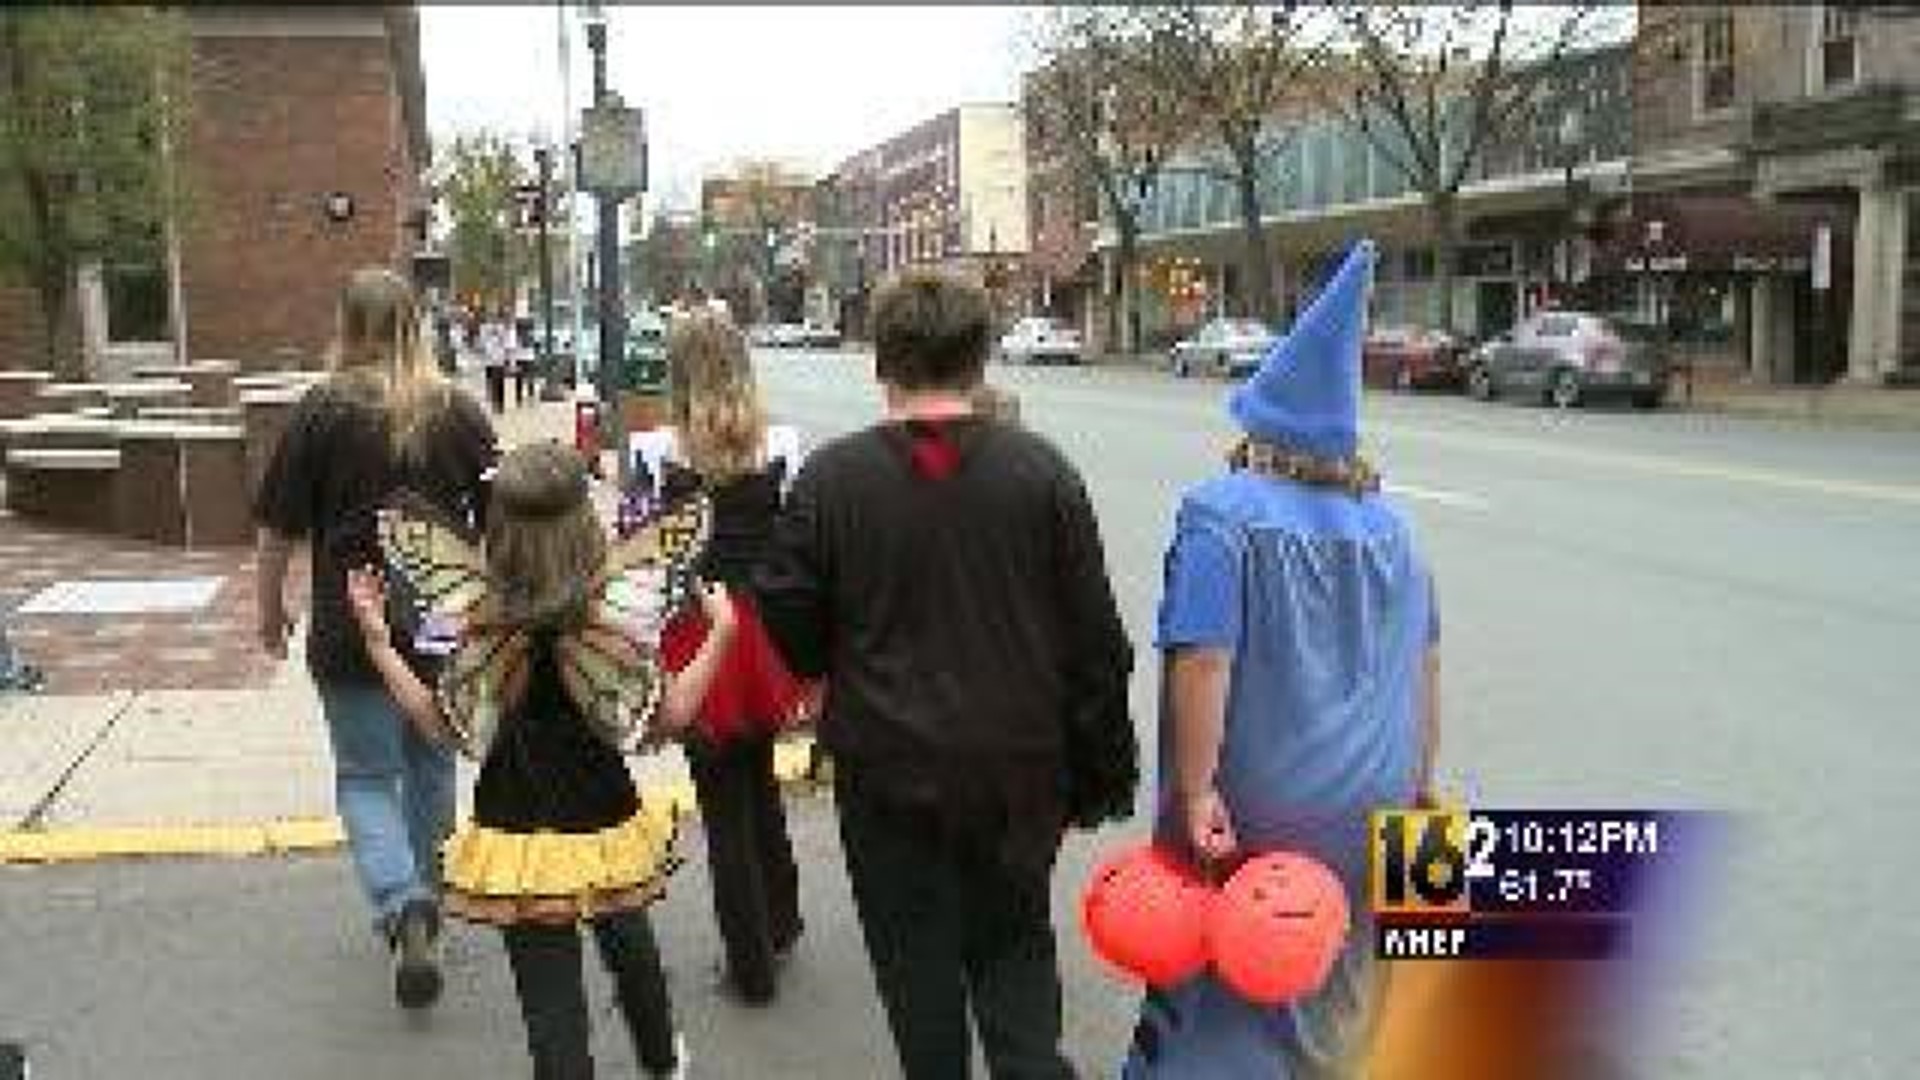 Main Street Halloween in Bloomsburg